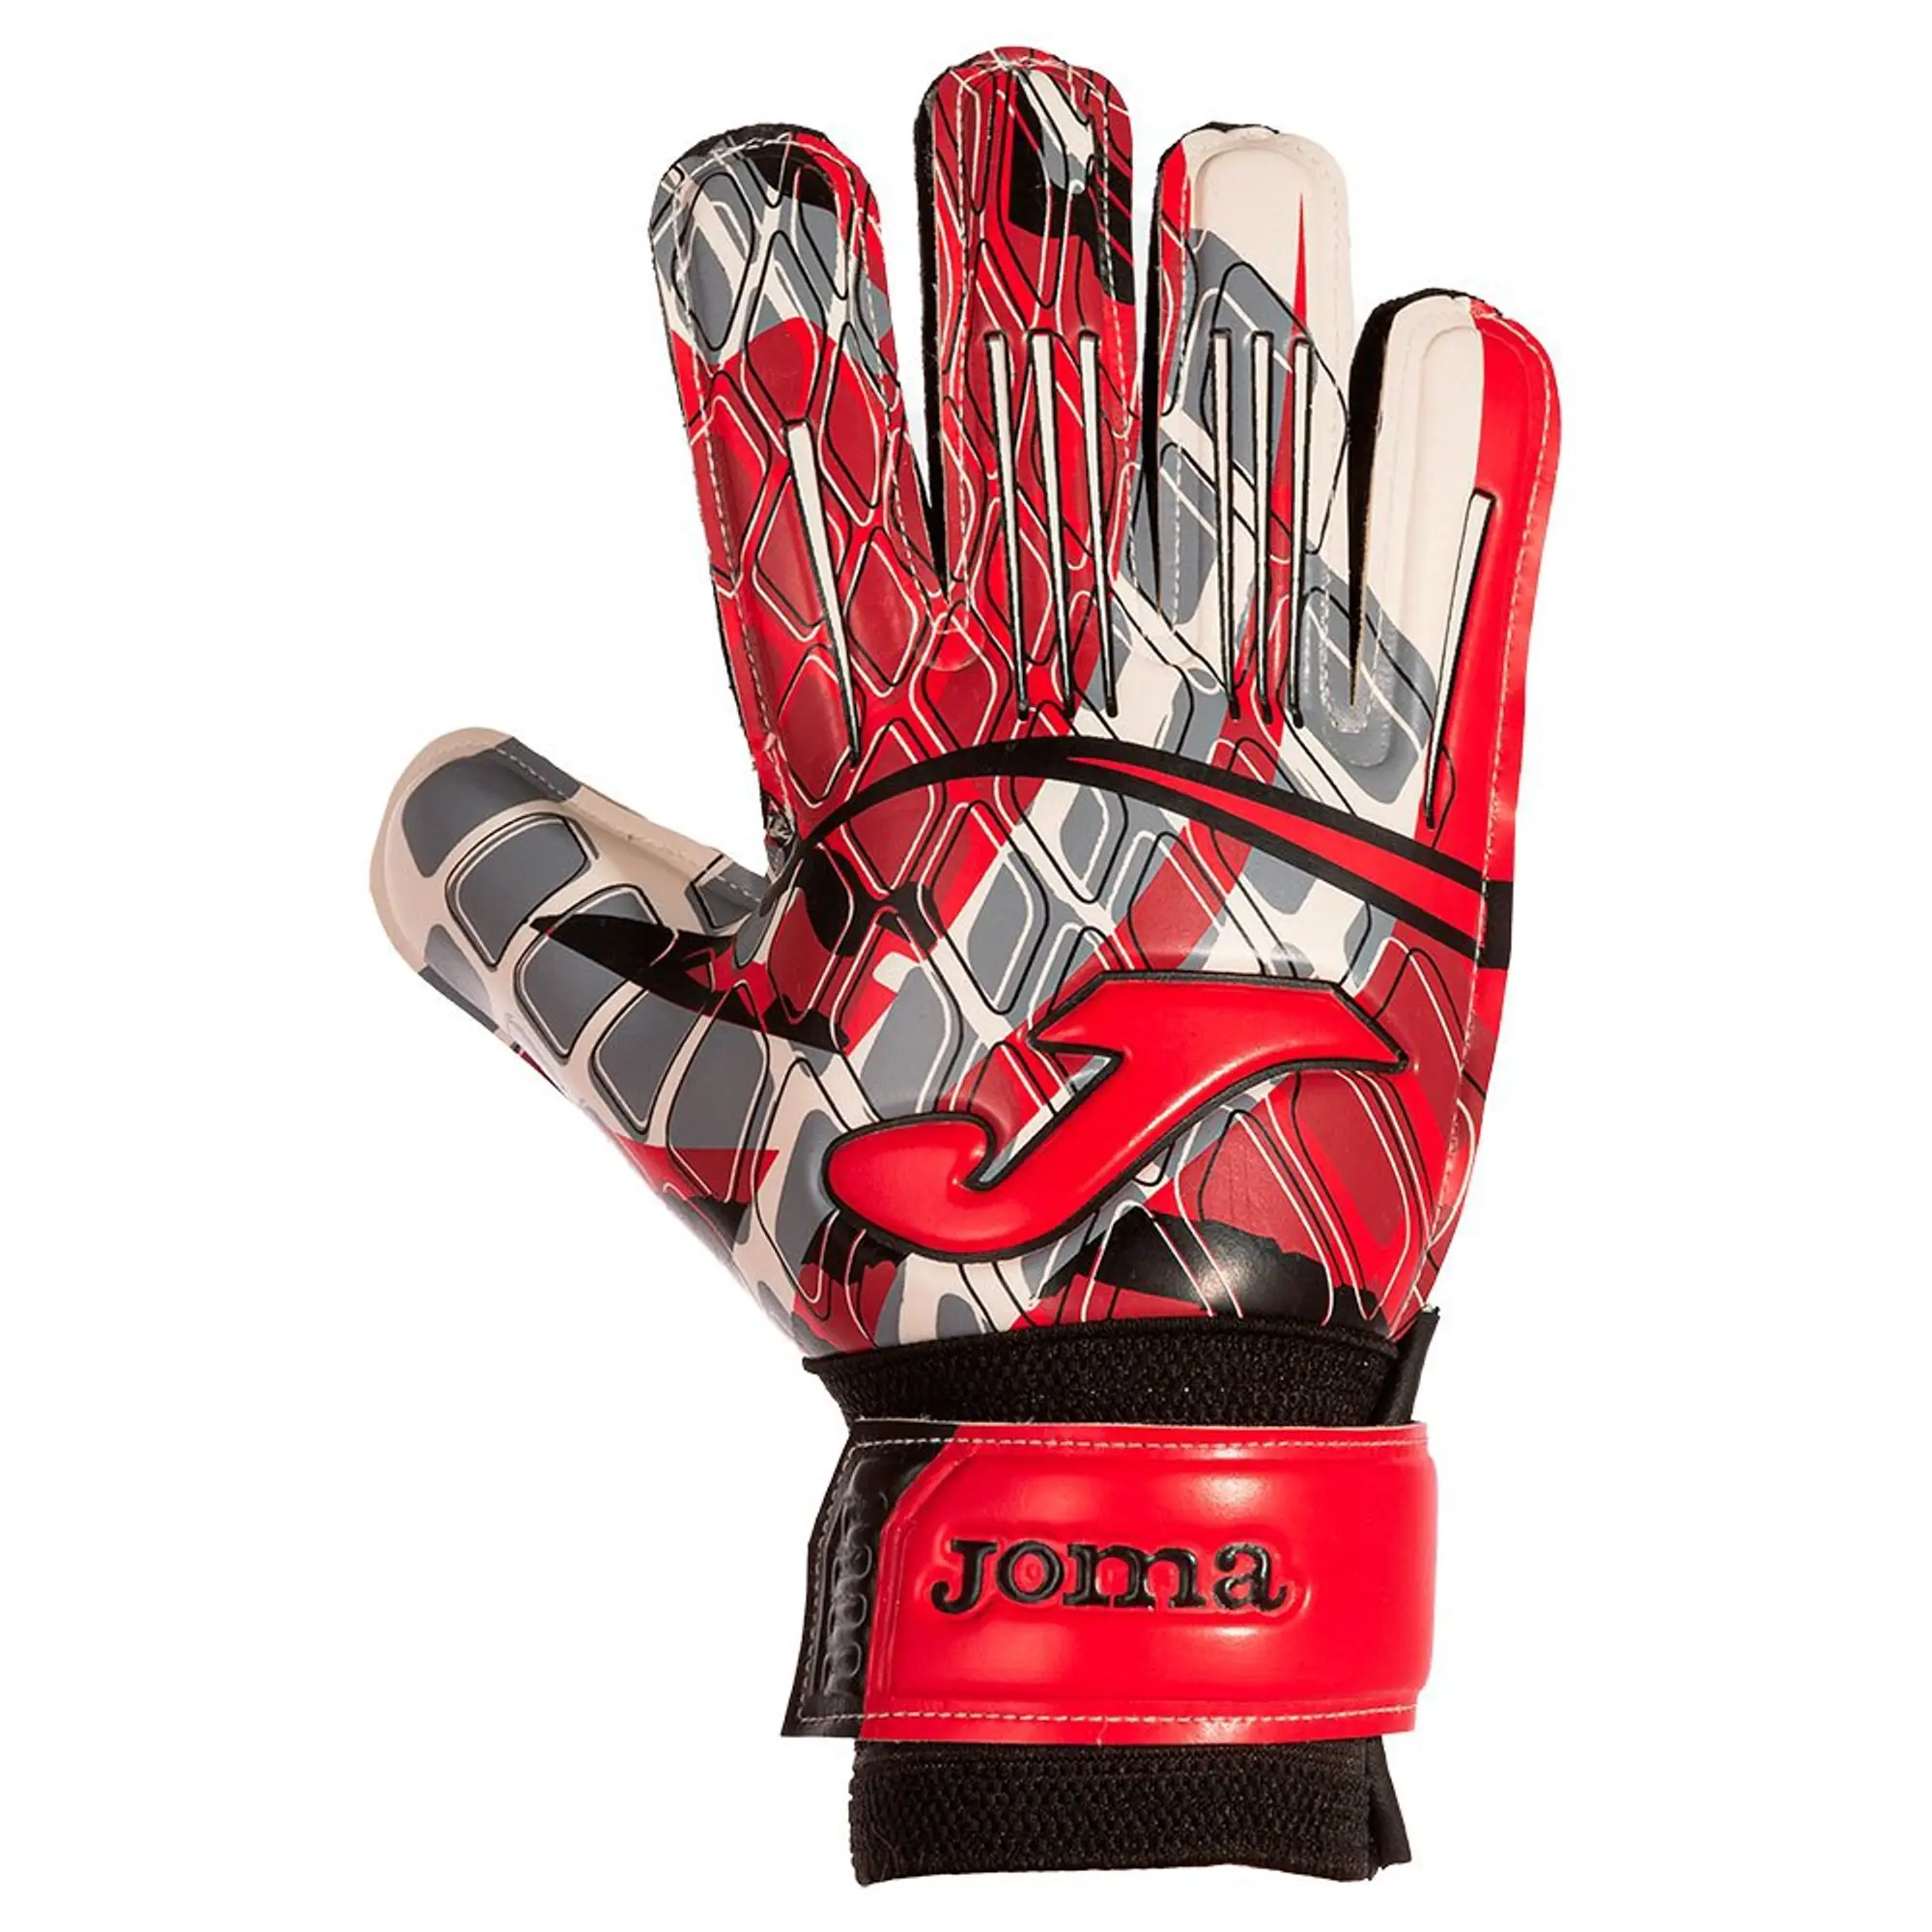 Joma Calcio 23 Goalkeeper Gloves  8 -